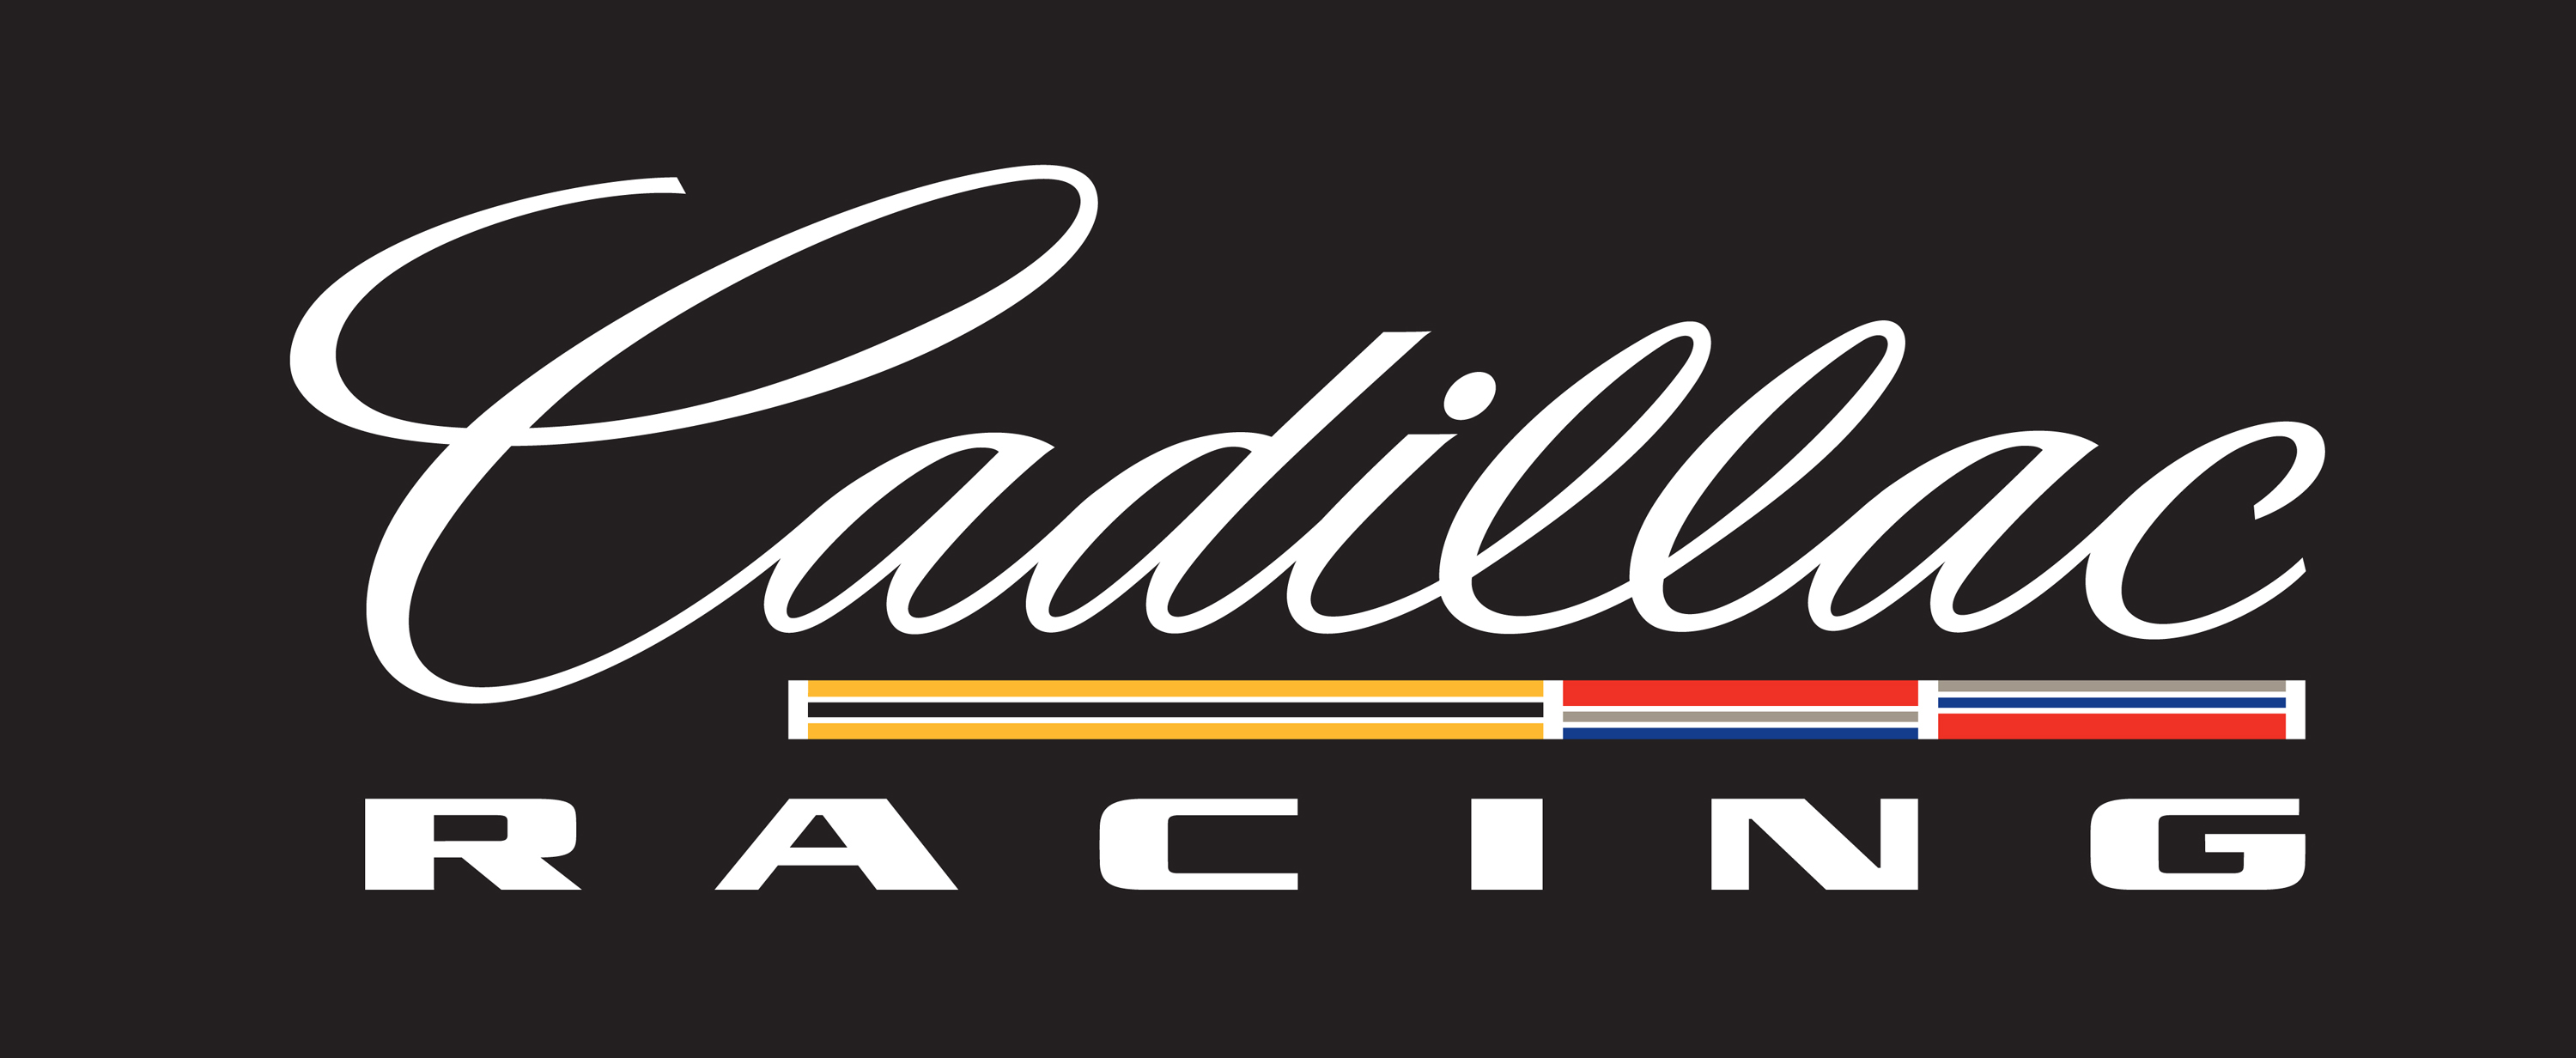 racing, Logo, Race, Cadillac Wallpaper